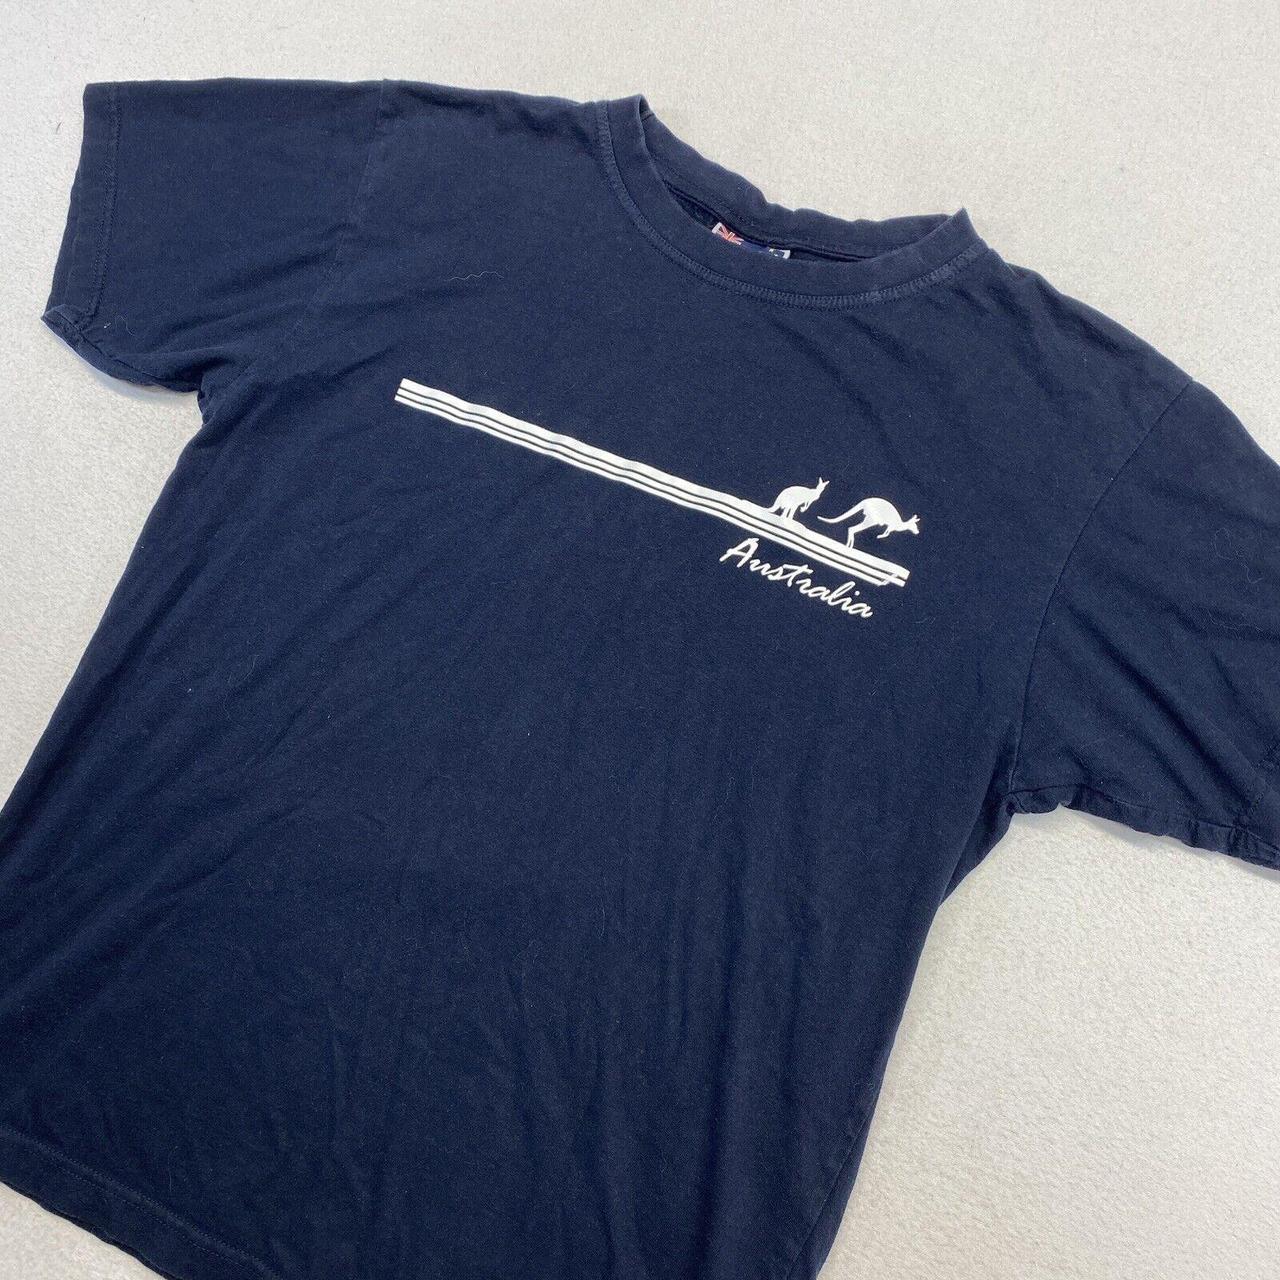 Product Image 2 - Australia T Shirt Adult Small